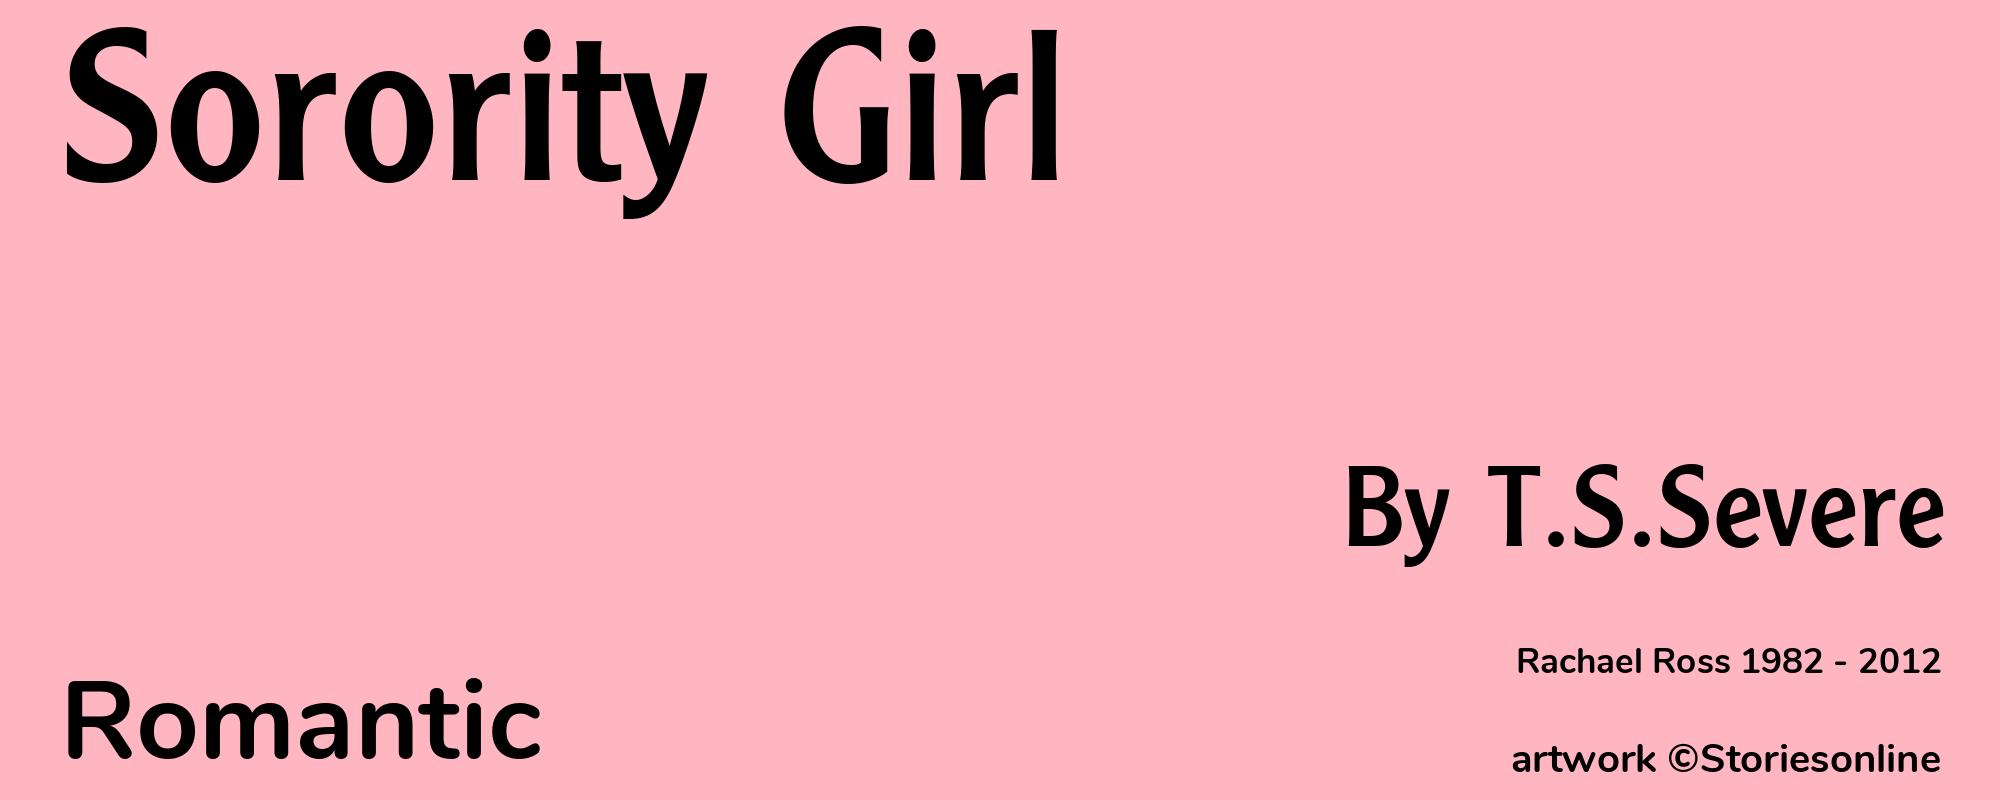 Sorority Girl - Cover